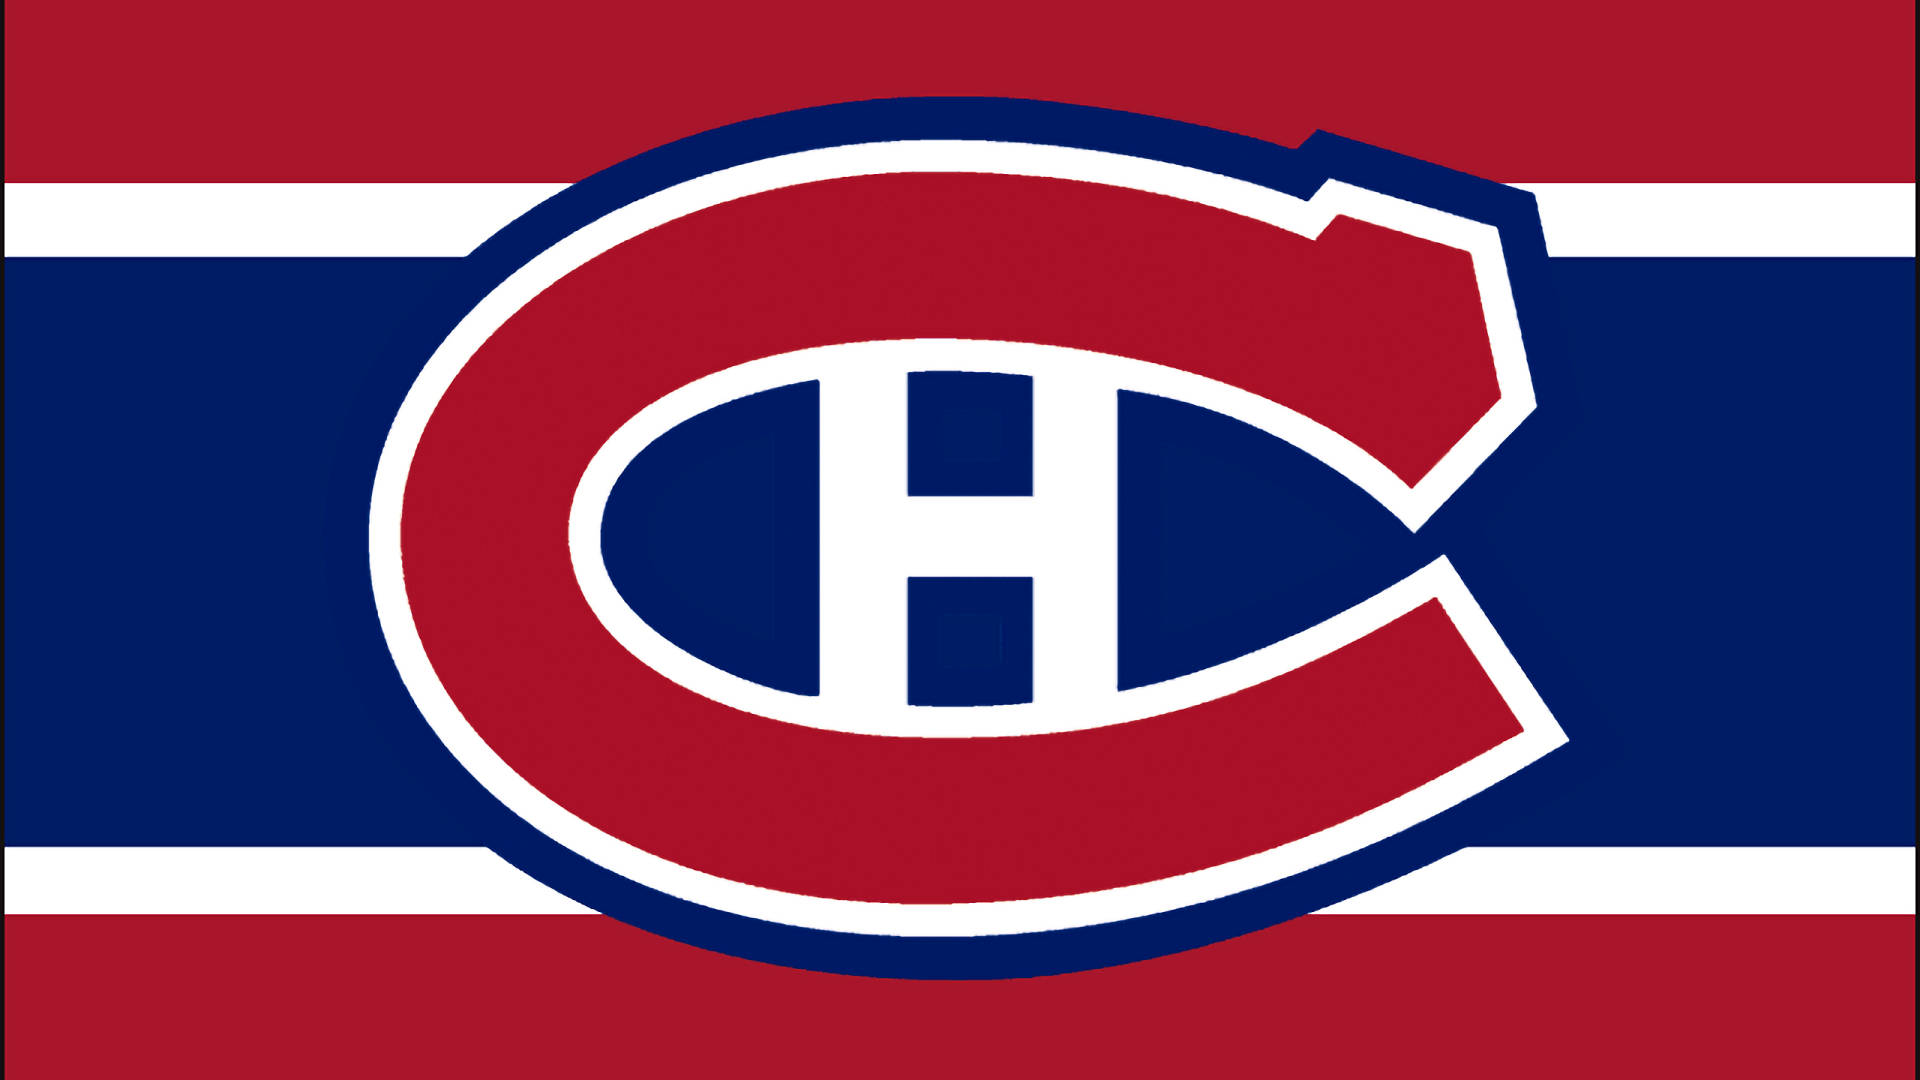 Montreal Canadiens Hockey Team Emblem Wallpaper